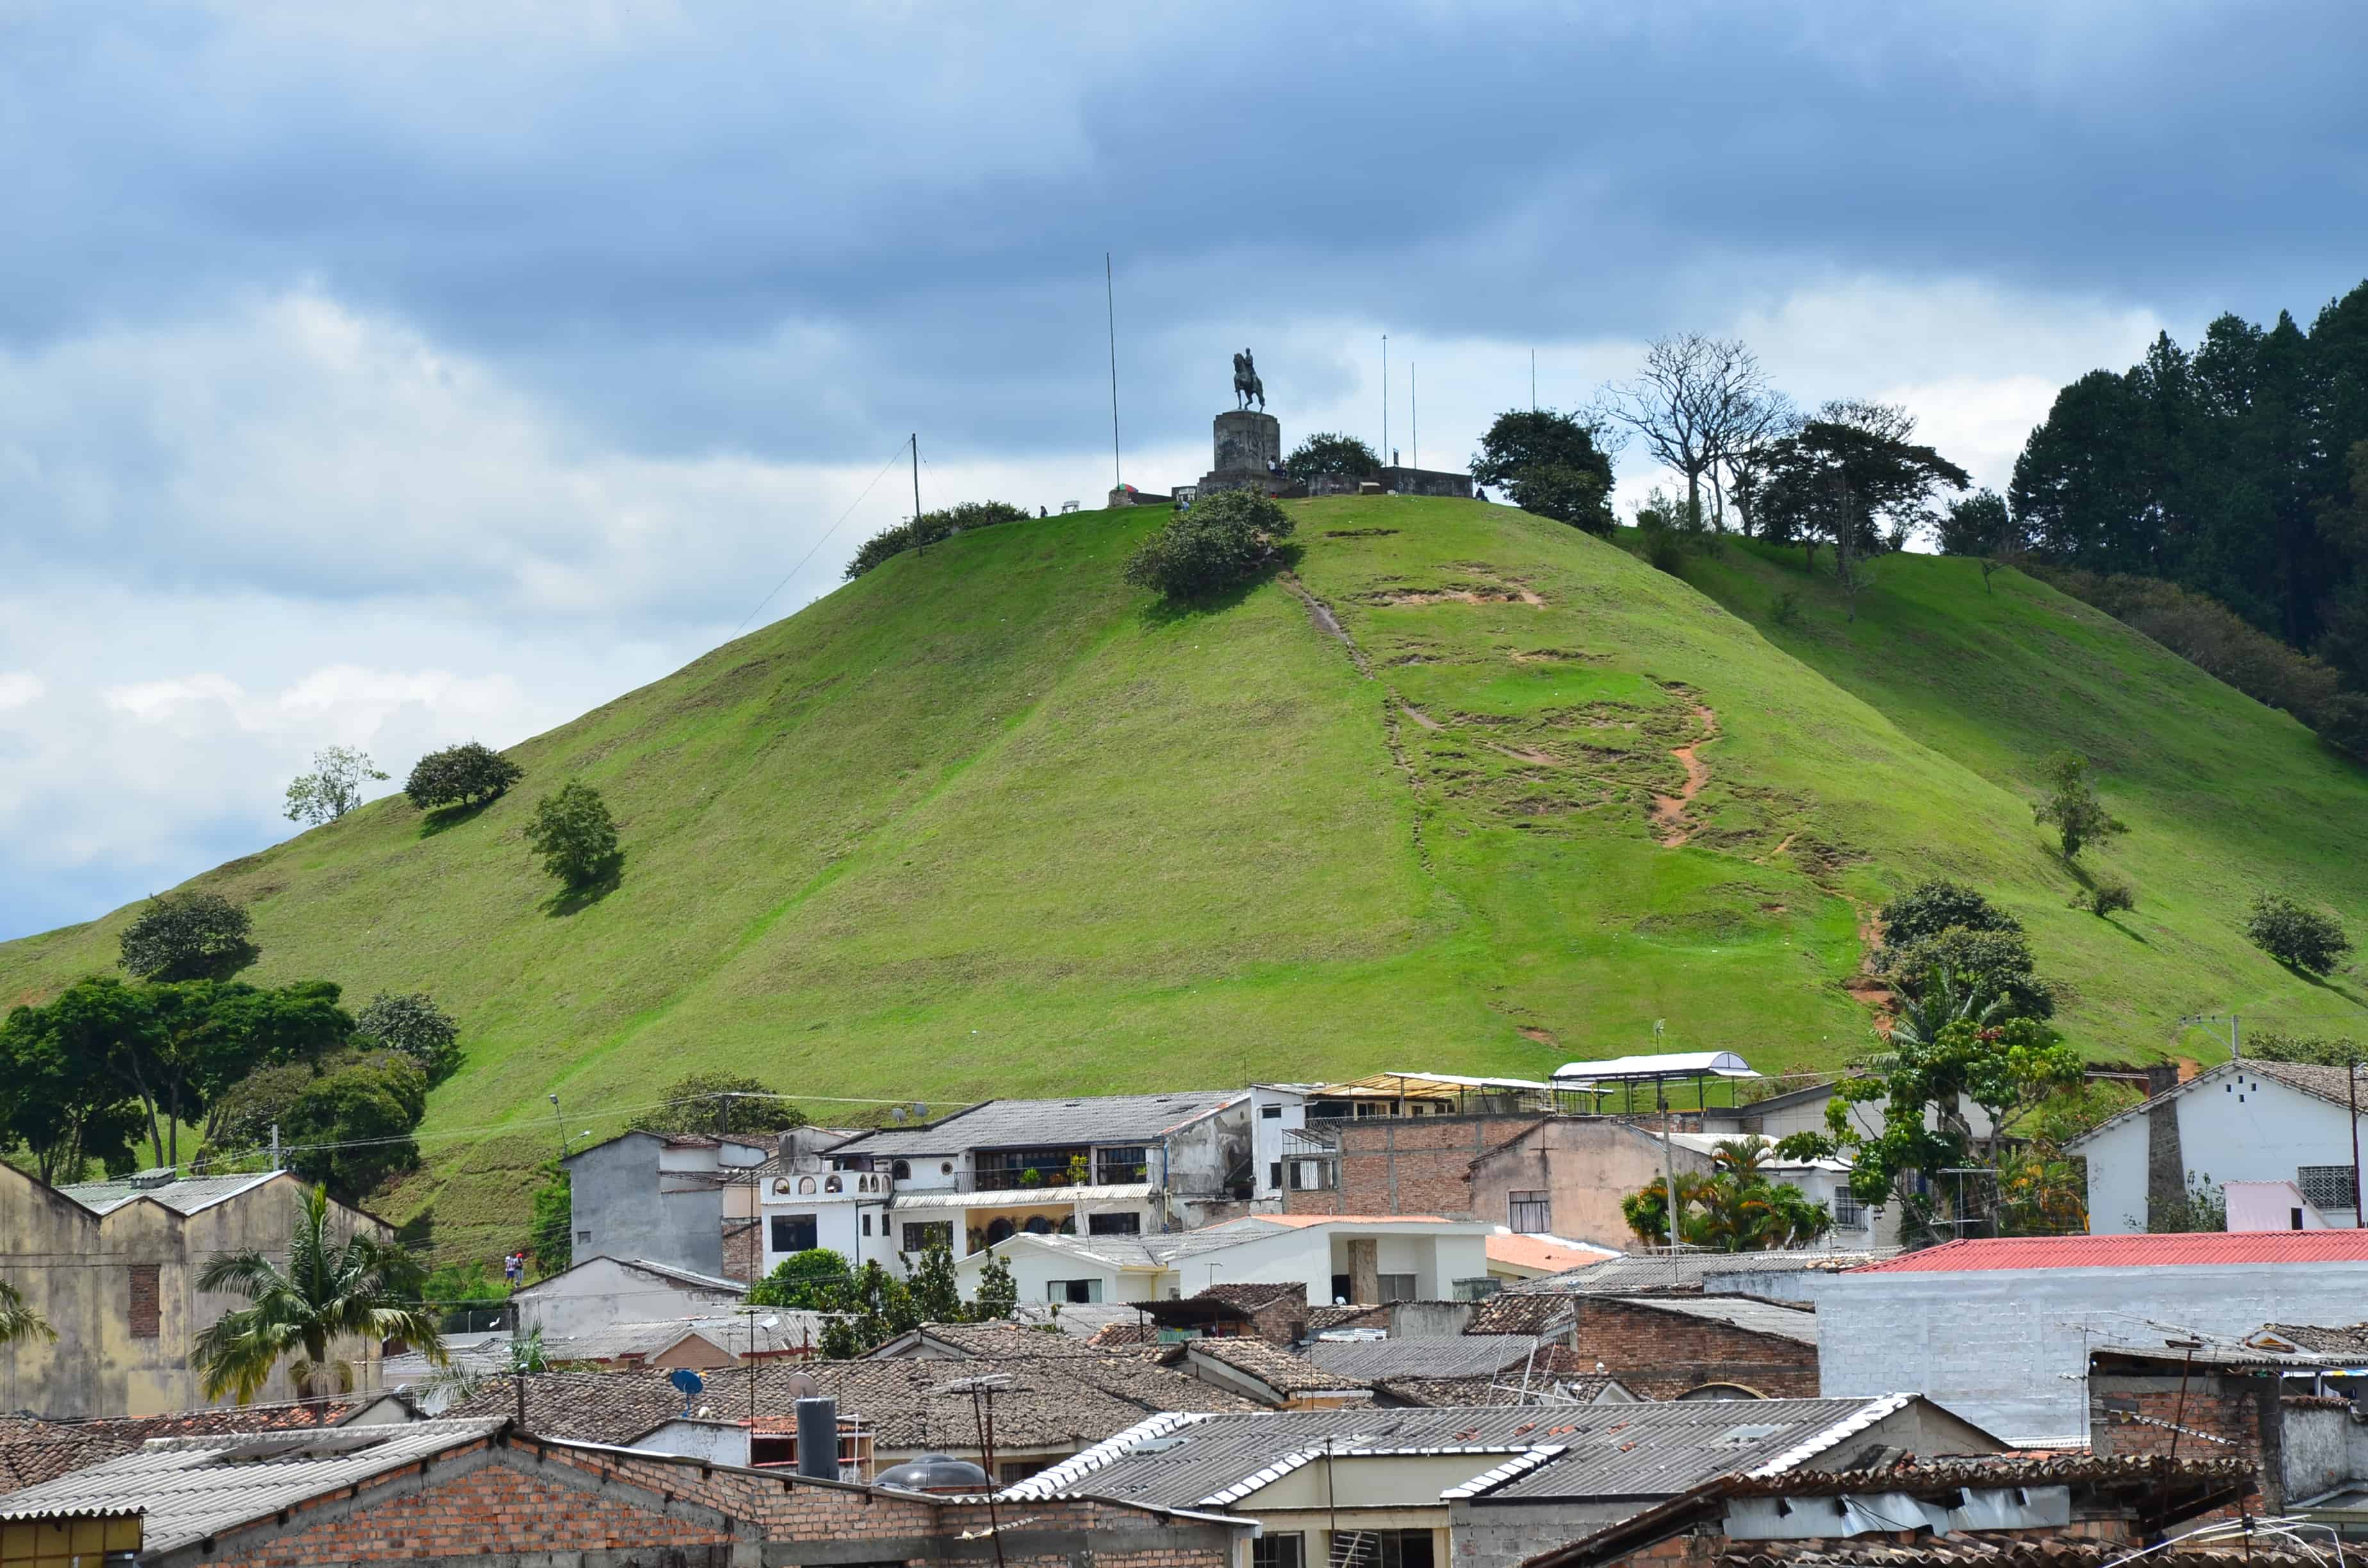 Tulcán Hill in Popayán, Cauca, Colombia